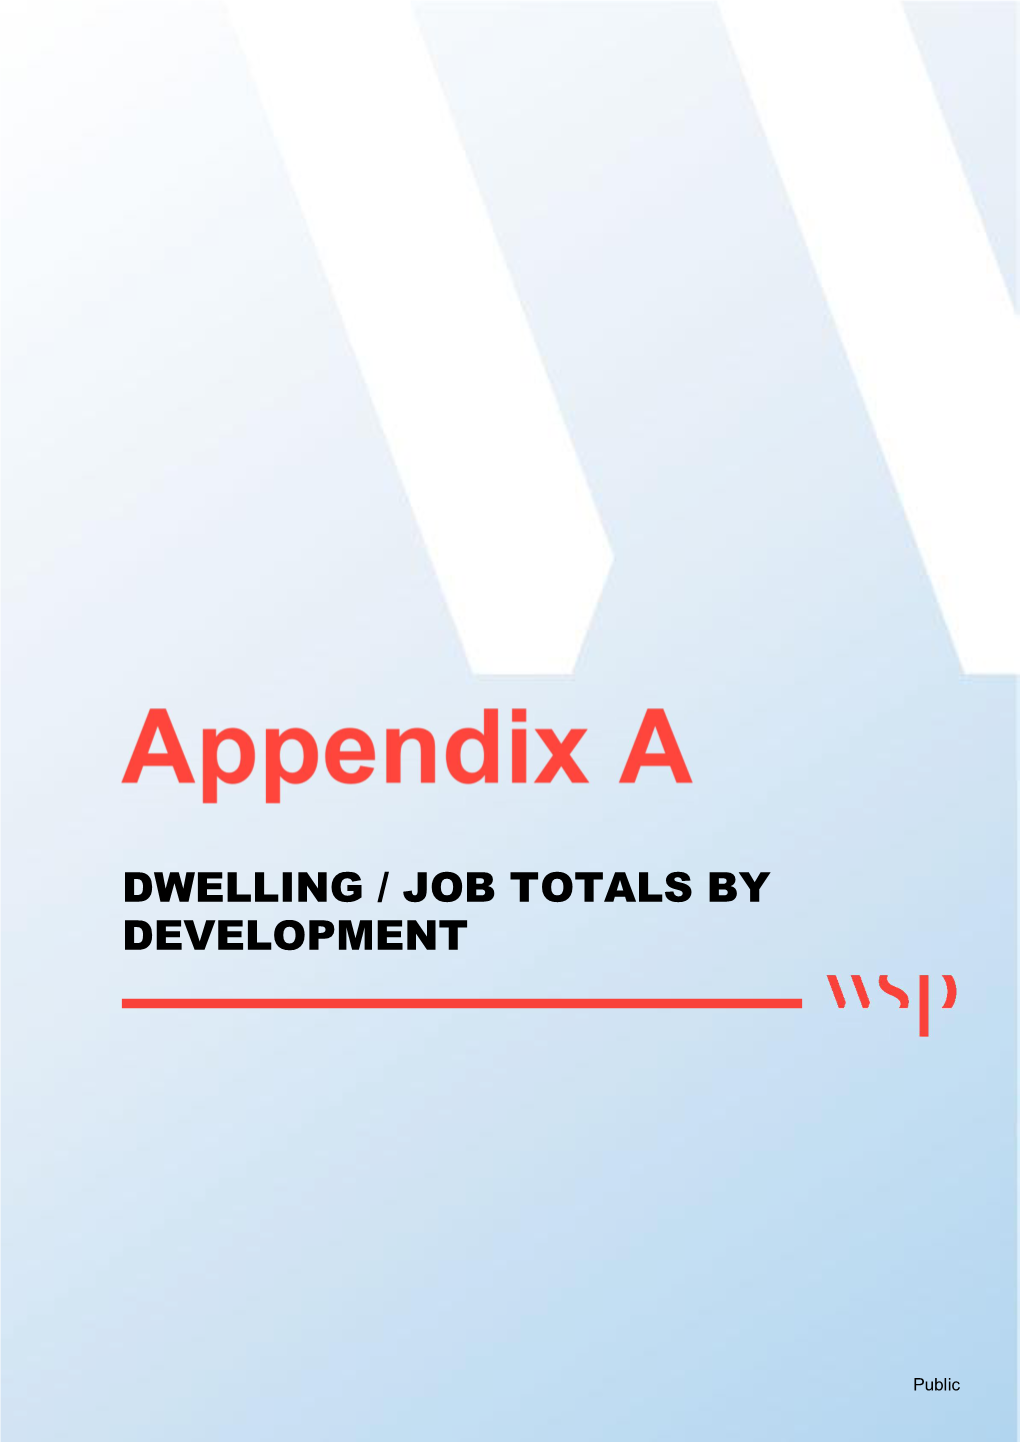 Dwelling / Job Totals by Development